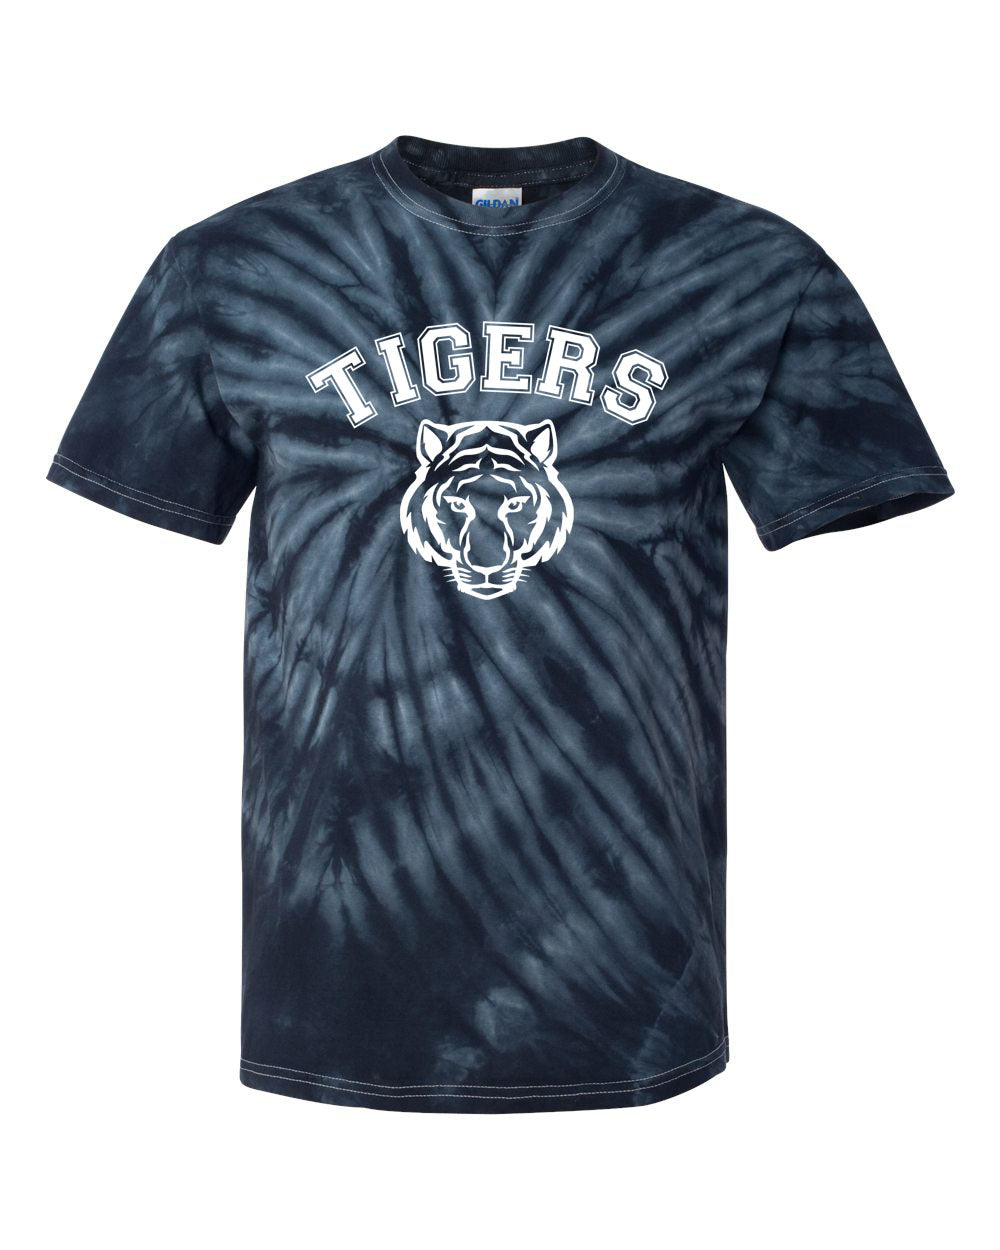 Tigers Design 2 Tie Dye t-shirt